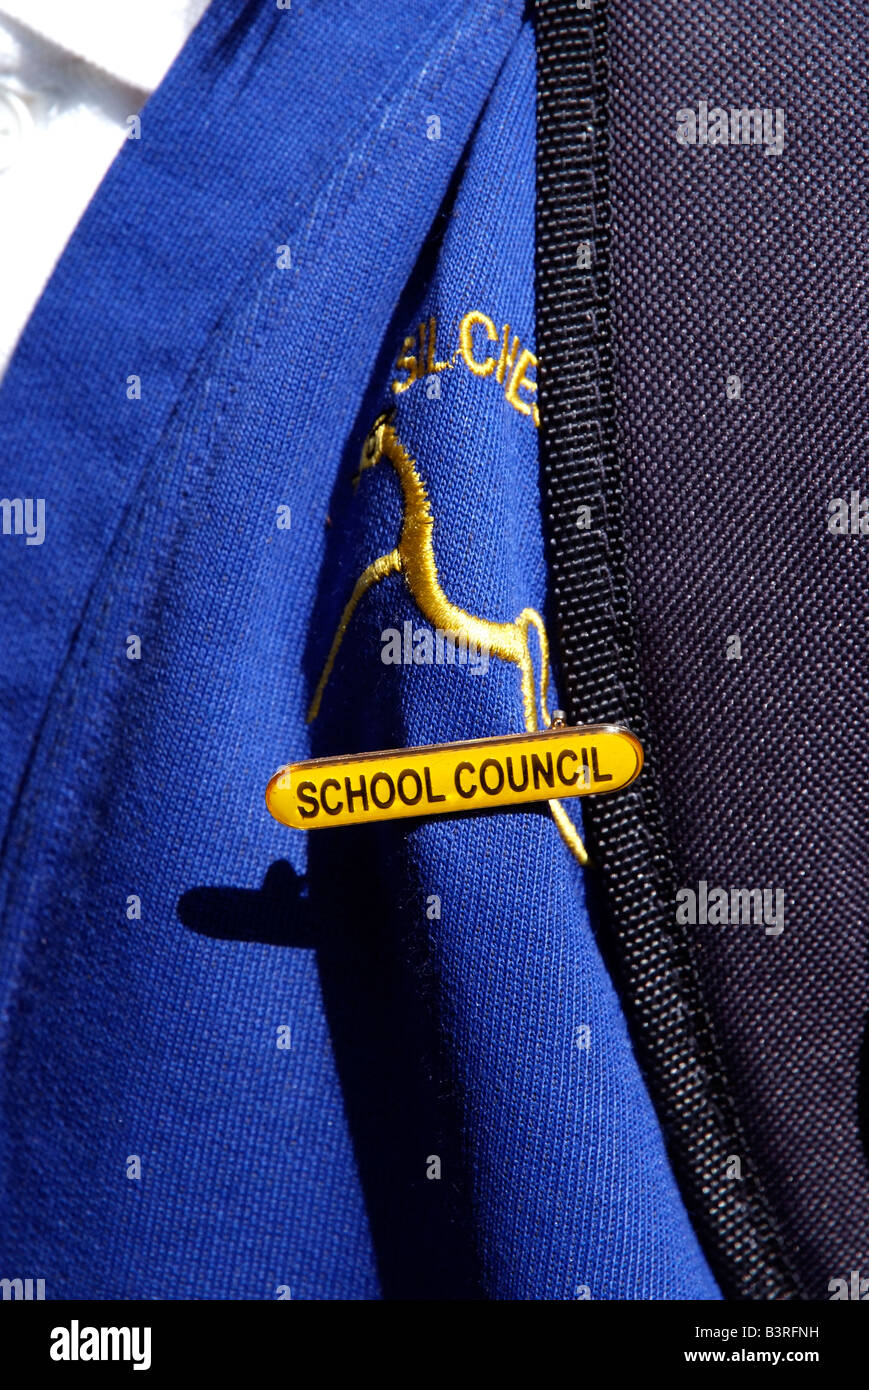 School Council member badge on childs uniform Stock Photo